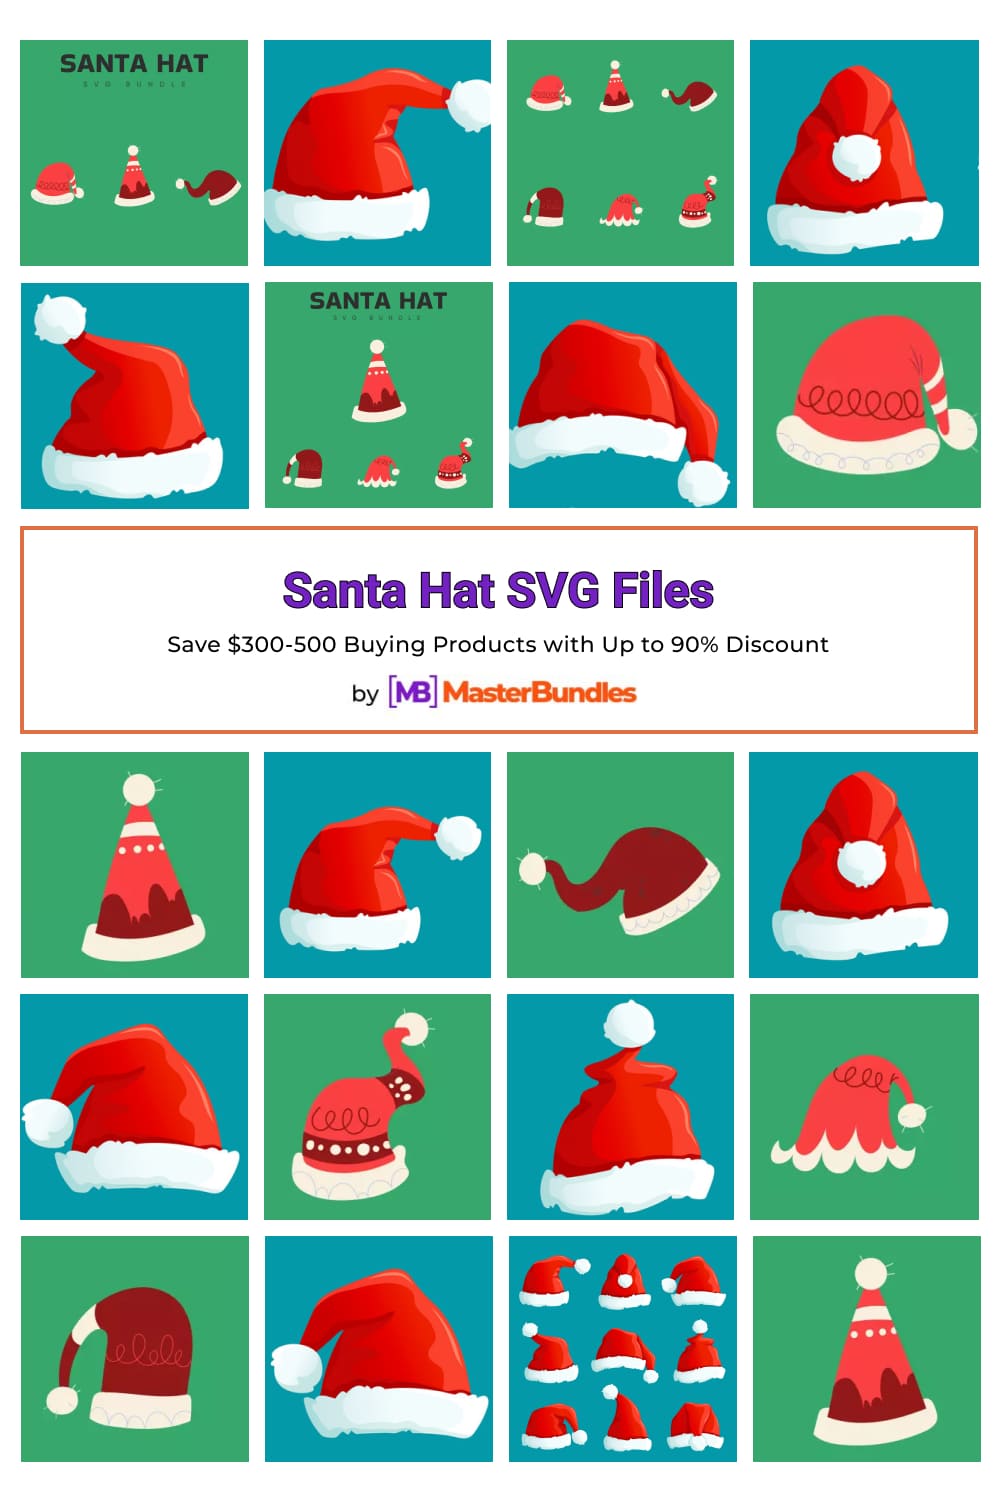 Santa Hat SVG Files for pinterest.